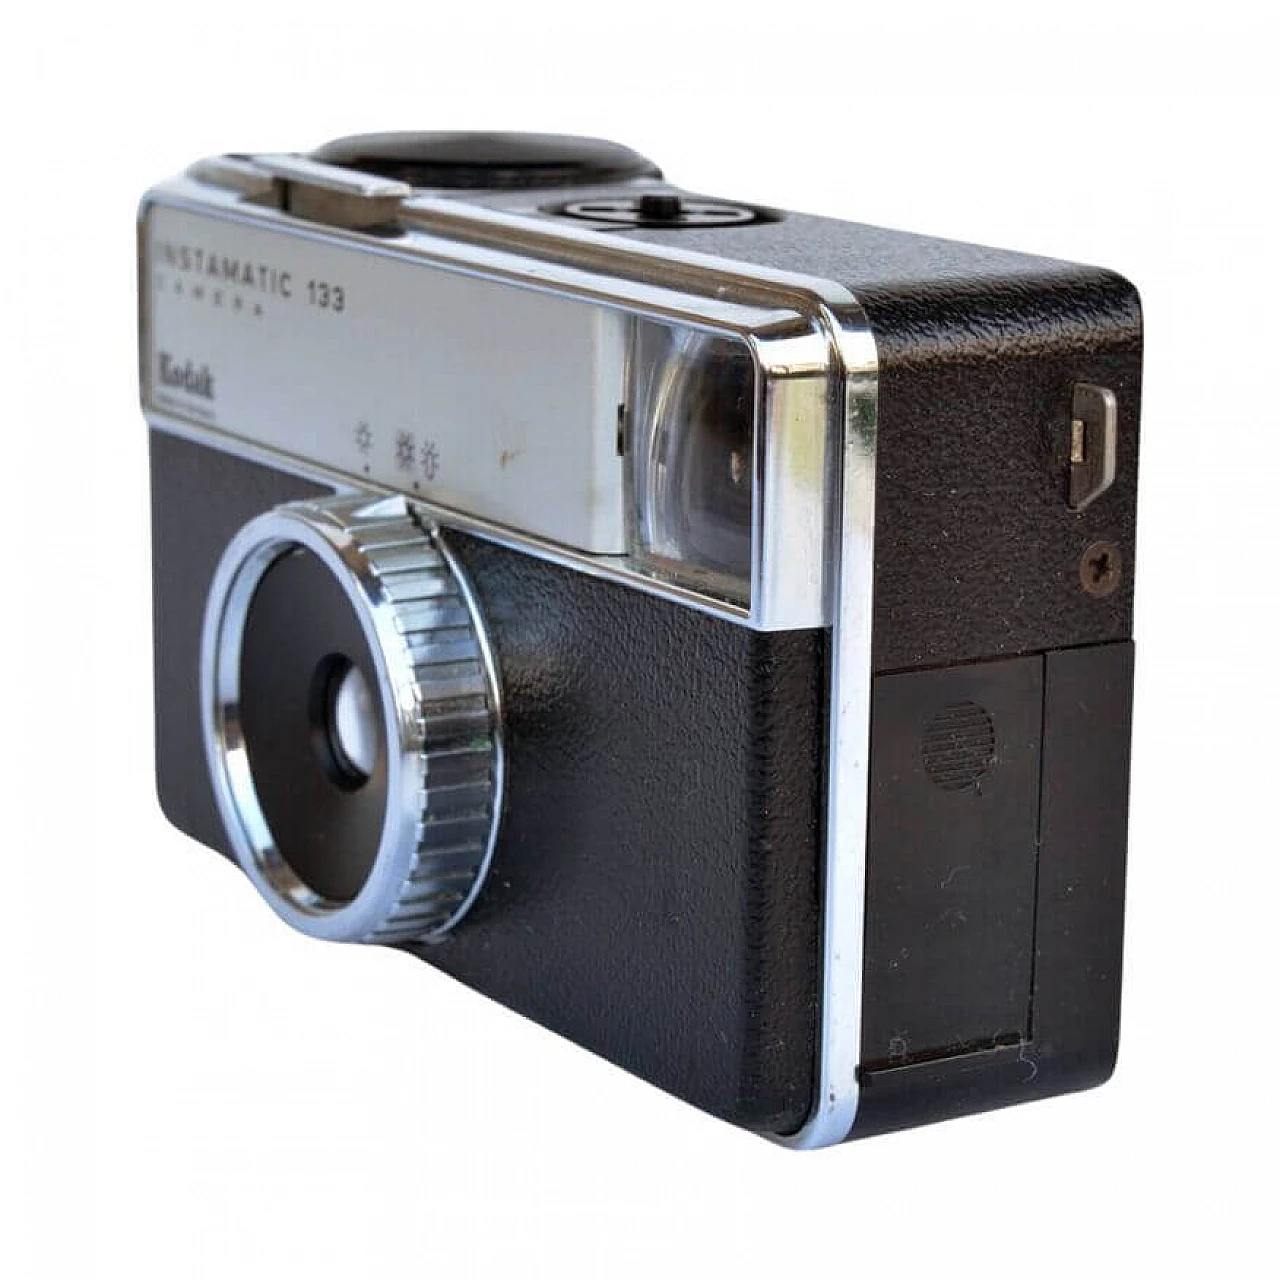 Kodak Instamatic 133 analogue camera, 1970s 1